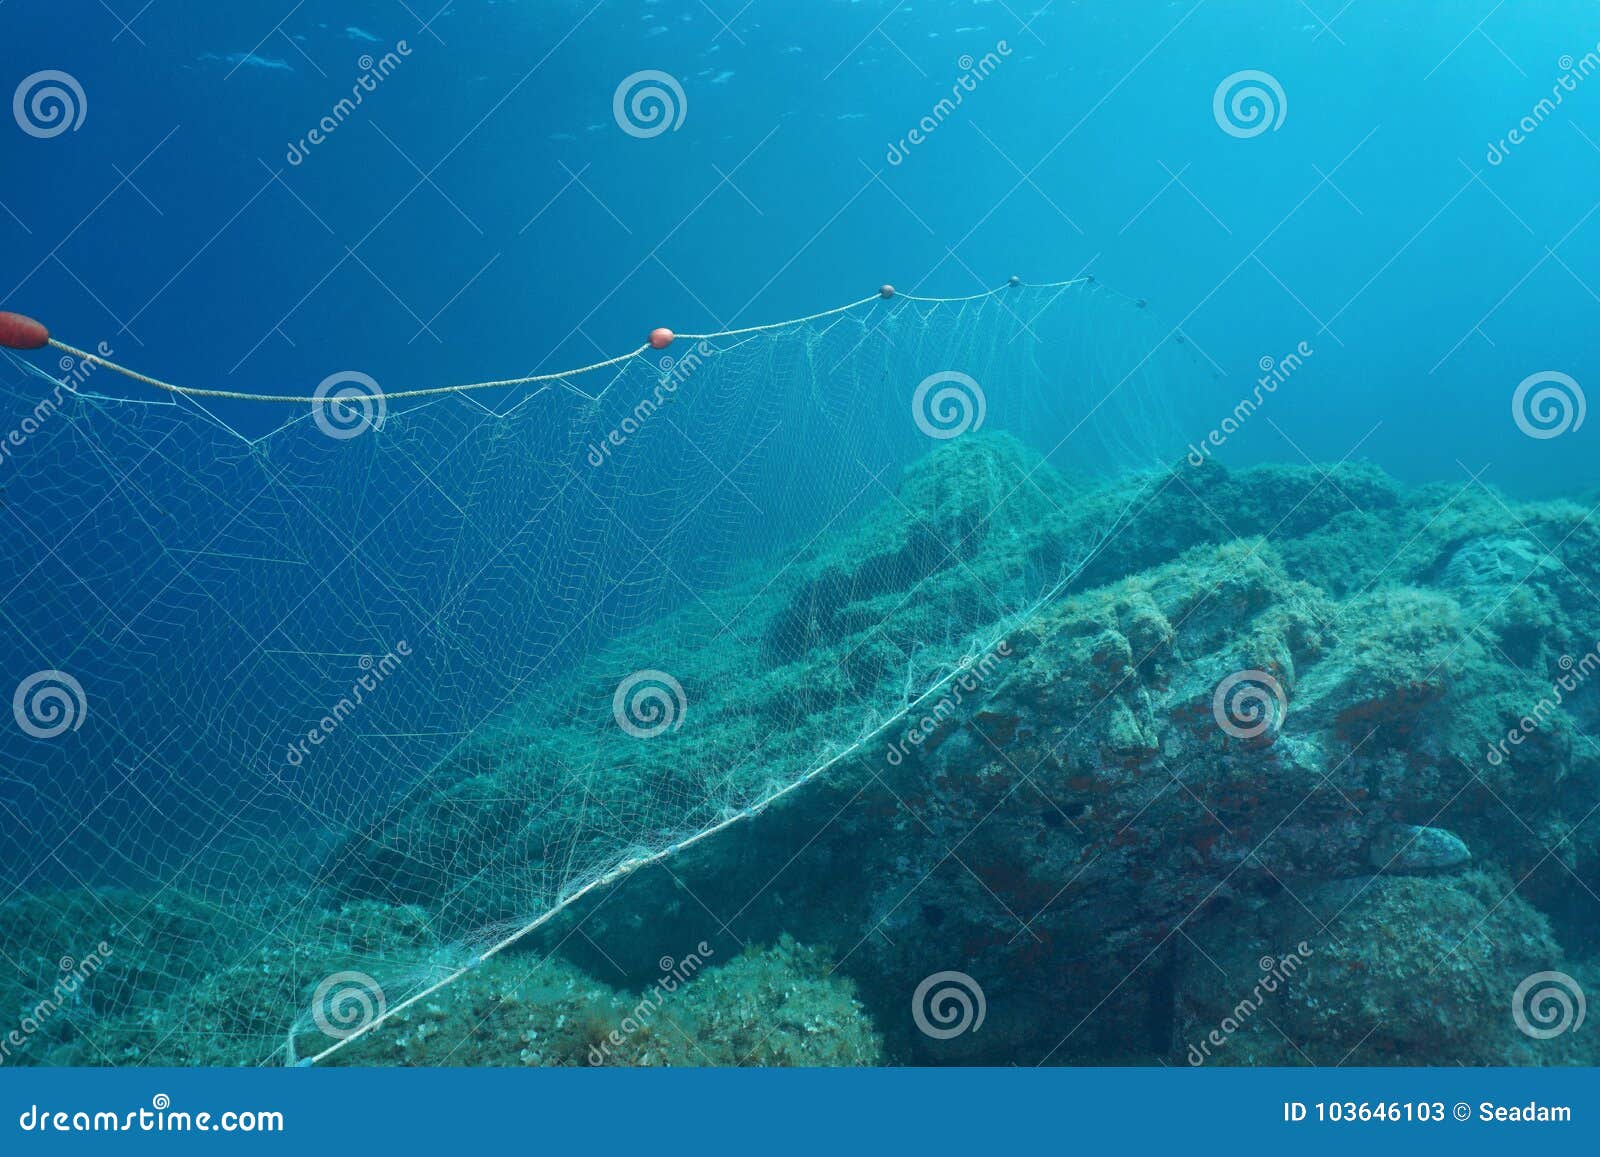 https://thumbs.dreamstime.com/z/underwater-fishing-net-gillnet-fixed-rocks-seabed-mediterranean-sea-costa-brava-spain-underwater-sea-fishing-net-103646103.jpg